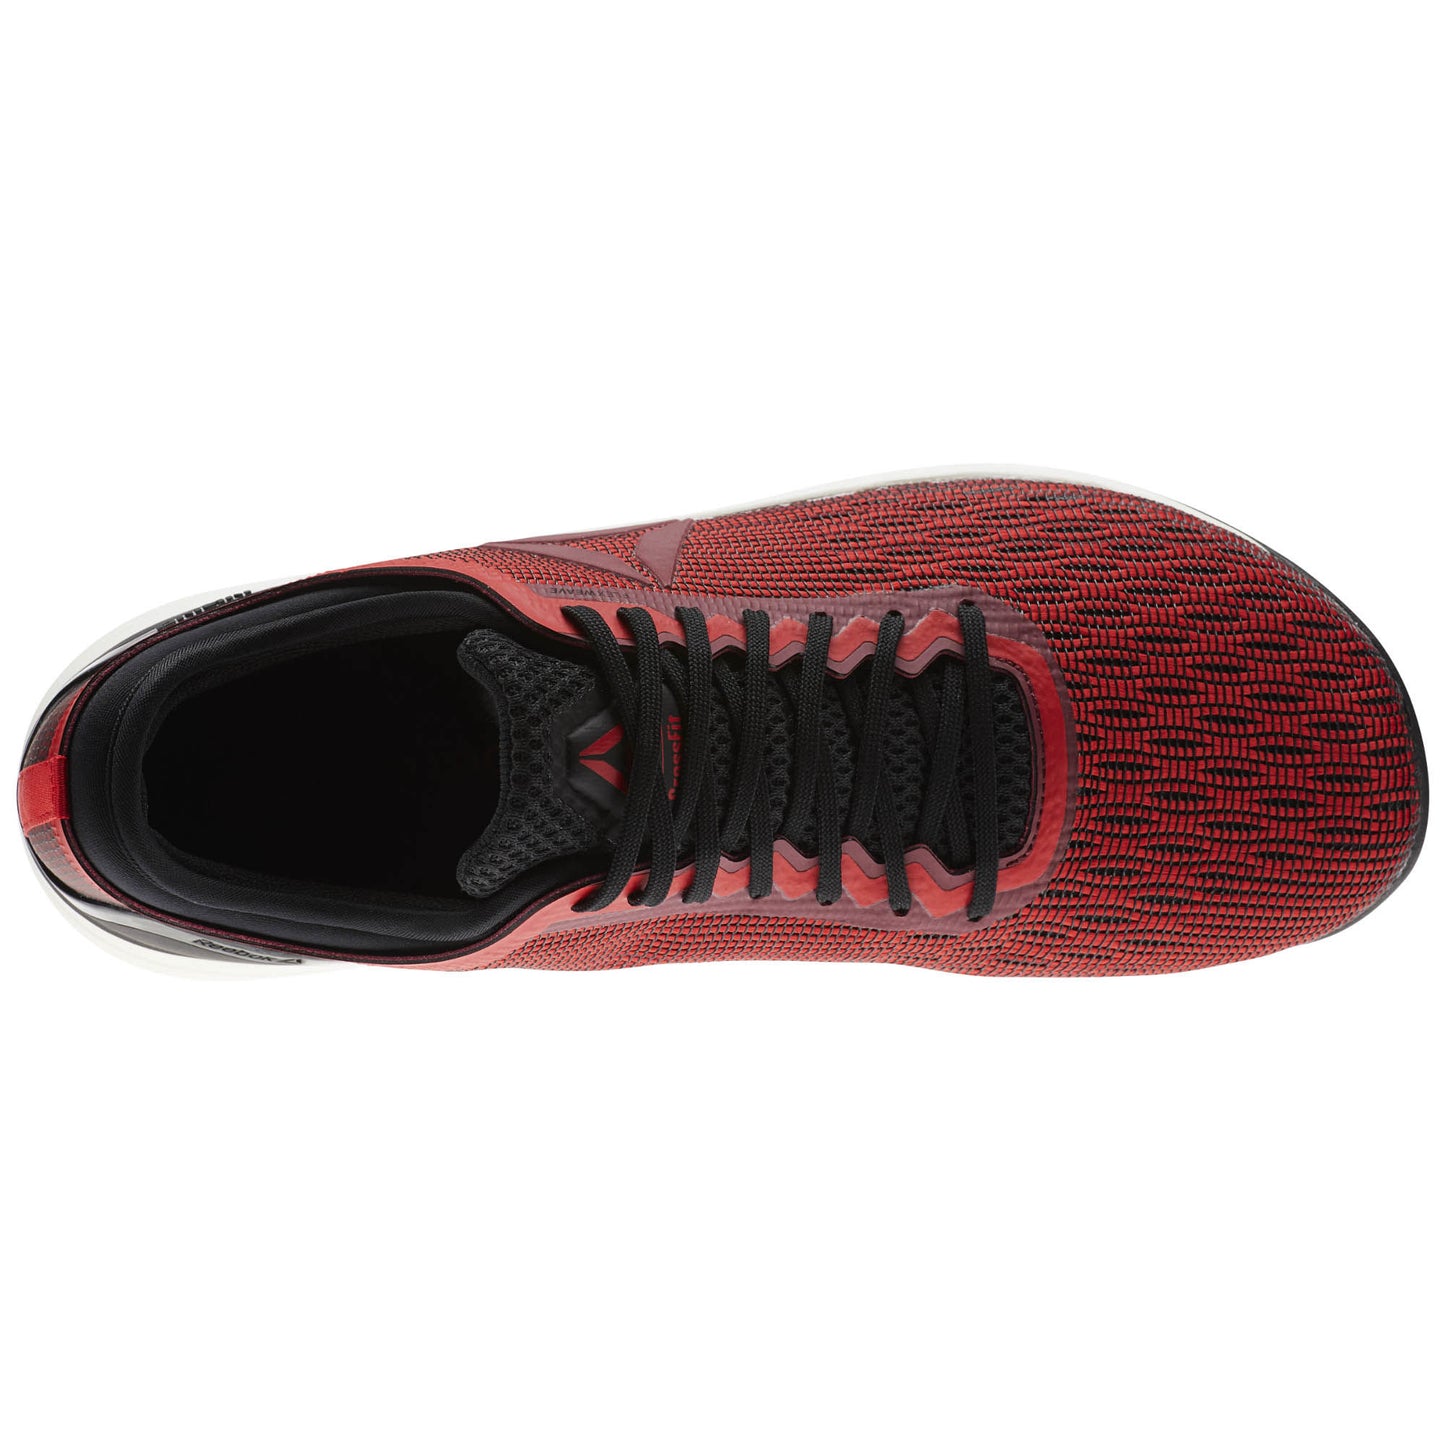 Chaussures Reebok Nano 8.0 - Rouge